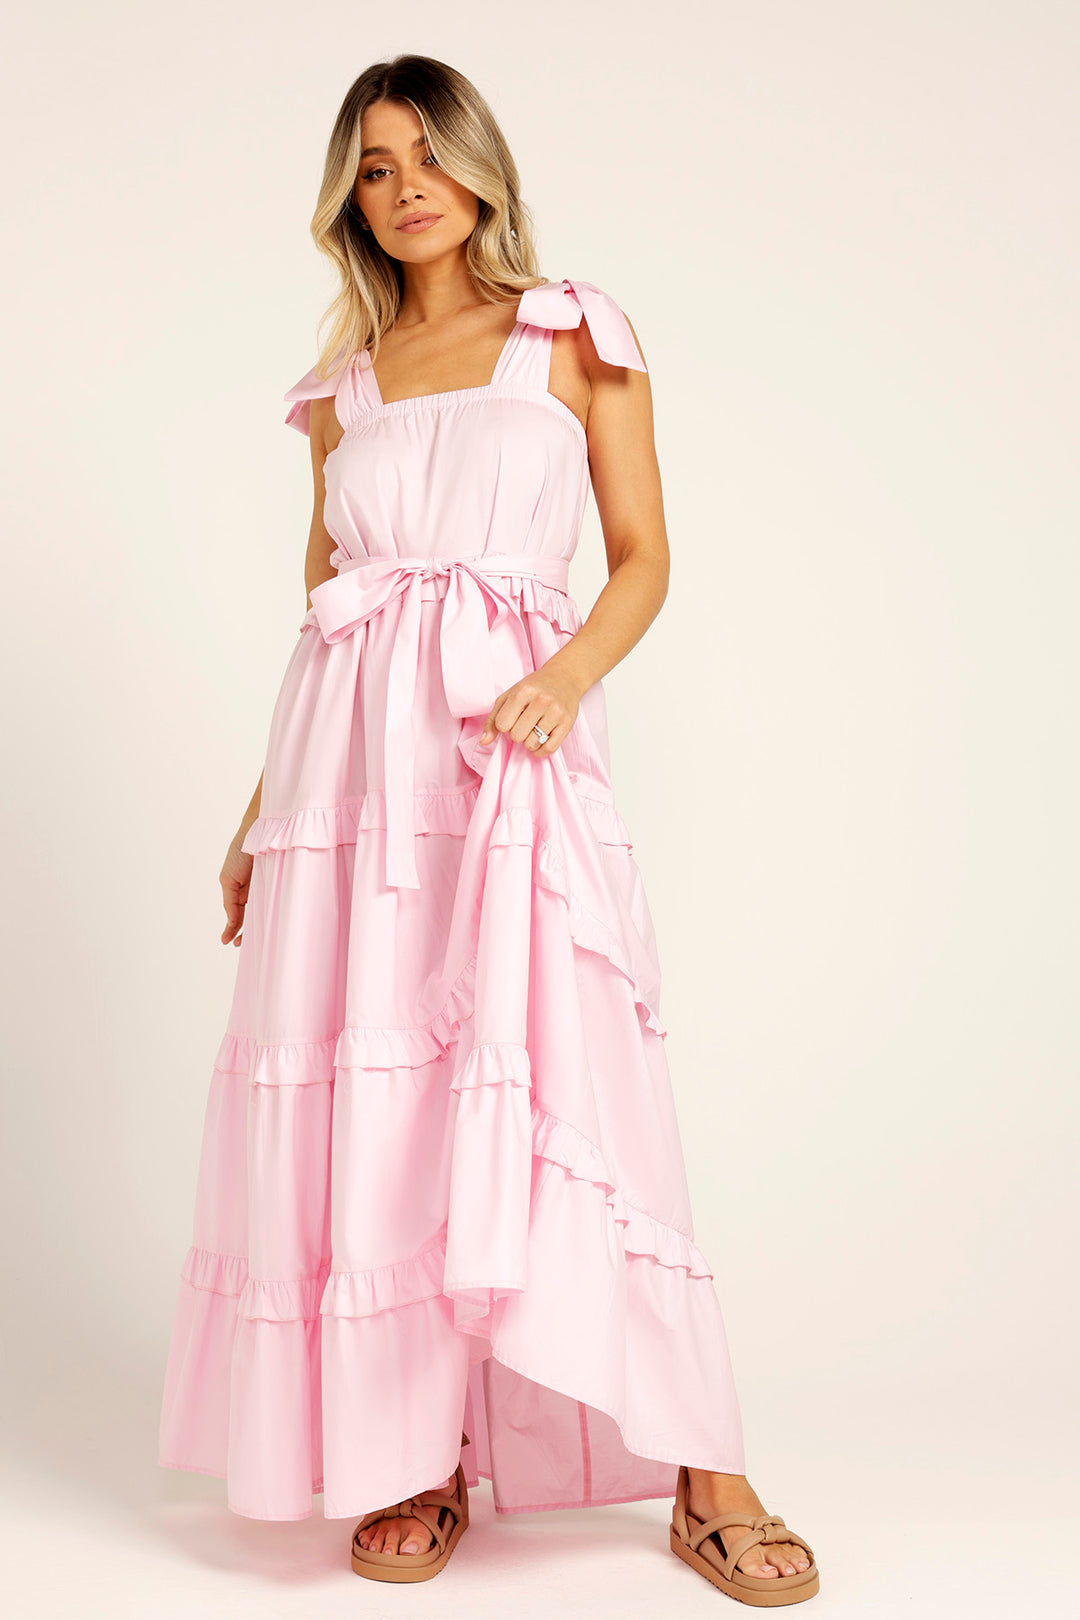 Scallop Dress - Soft Pink